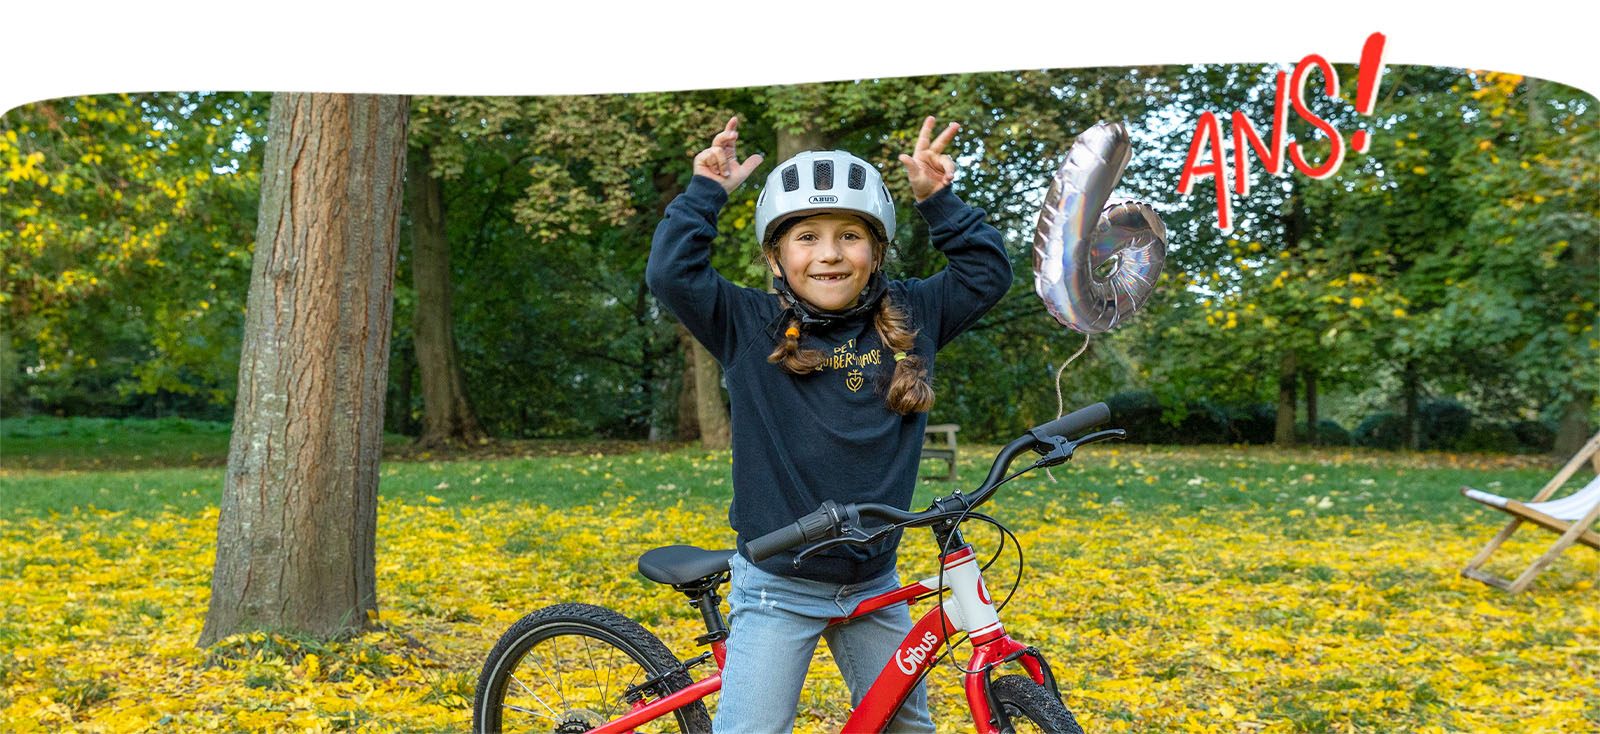 Vélo 7 ans : comment choisir ? – Gibus Cycles